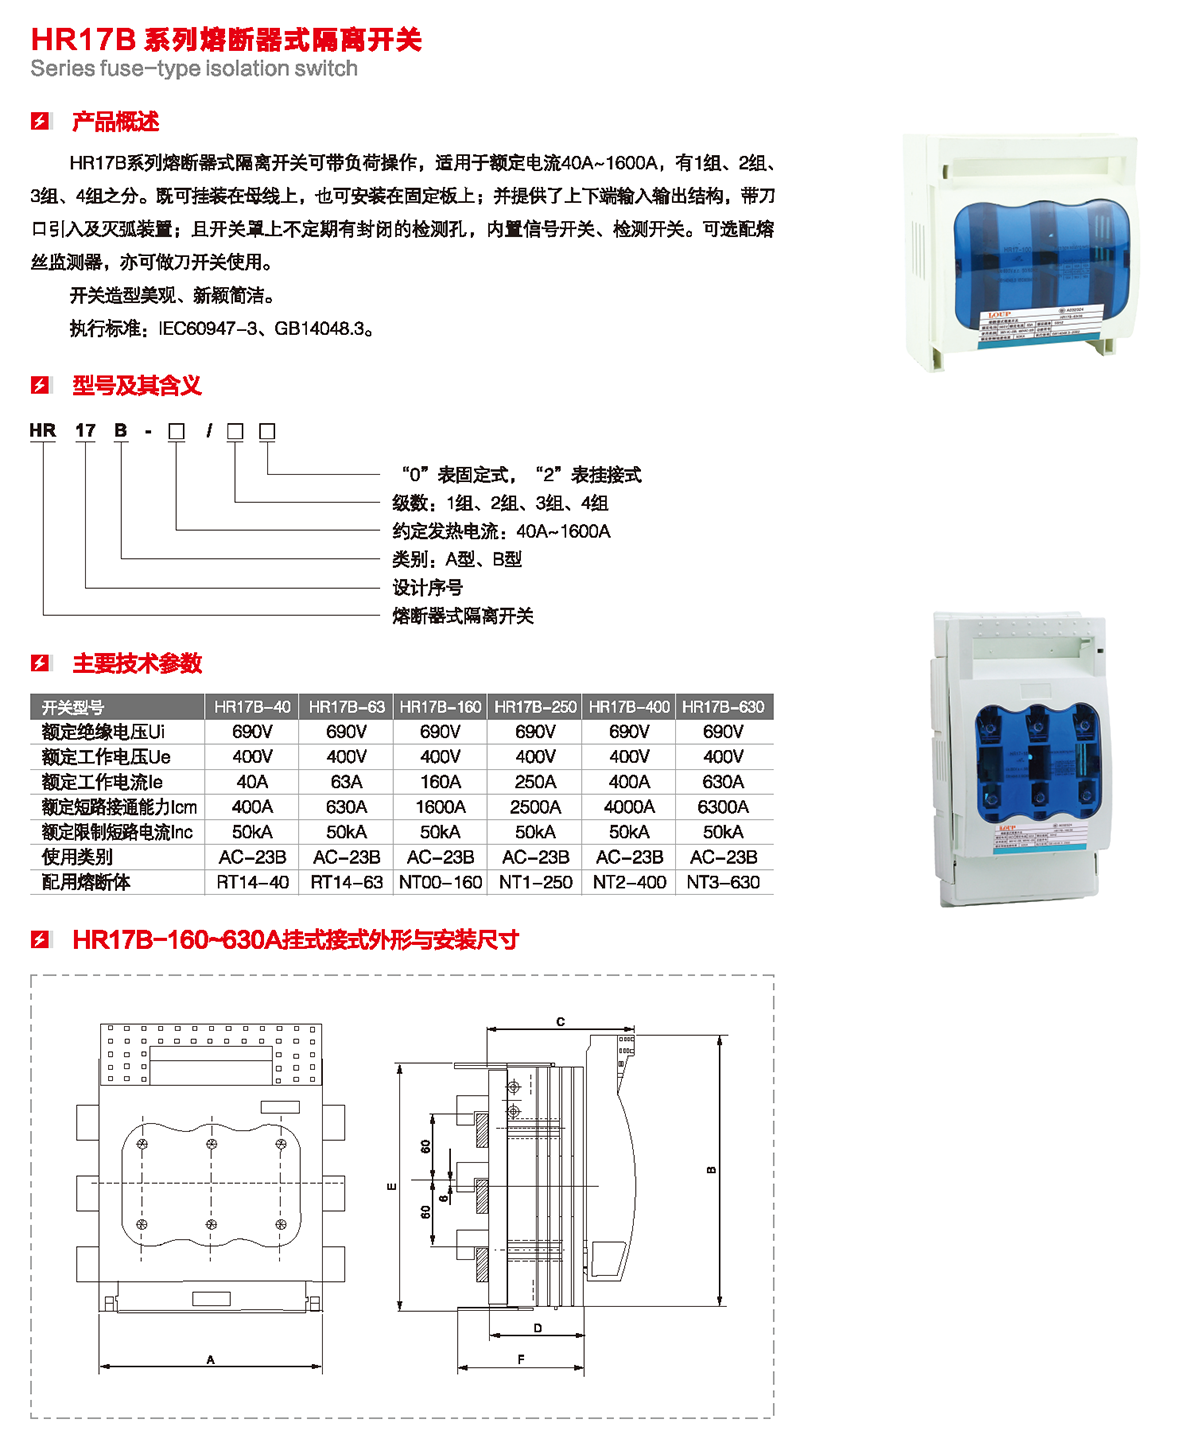 HR17B系列熔斷器式隔離開關產品概述、型號含義、技術參數